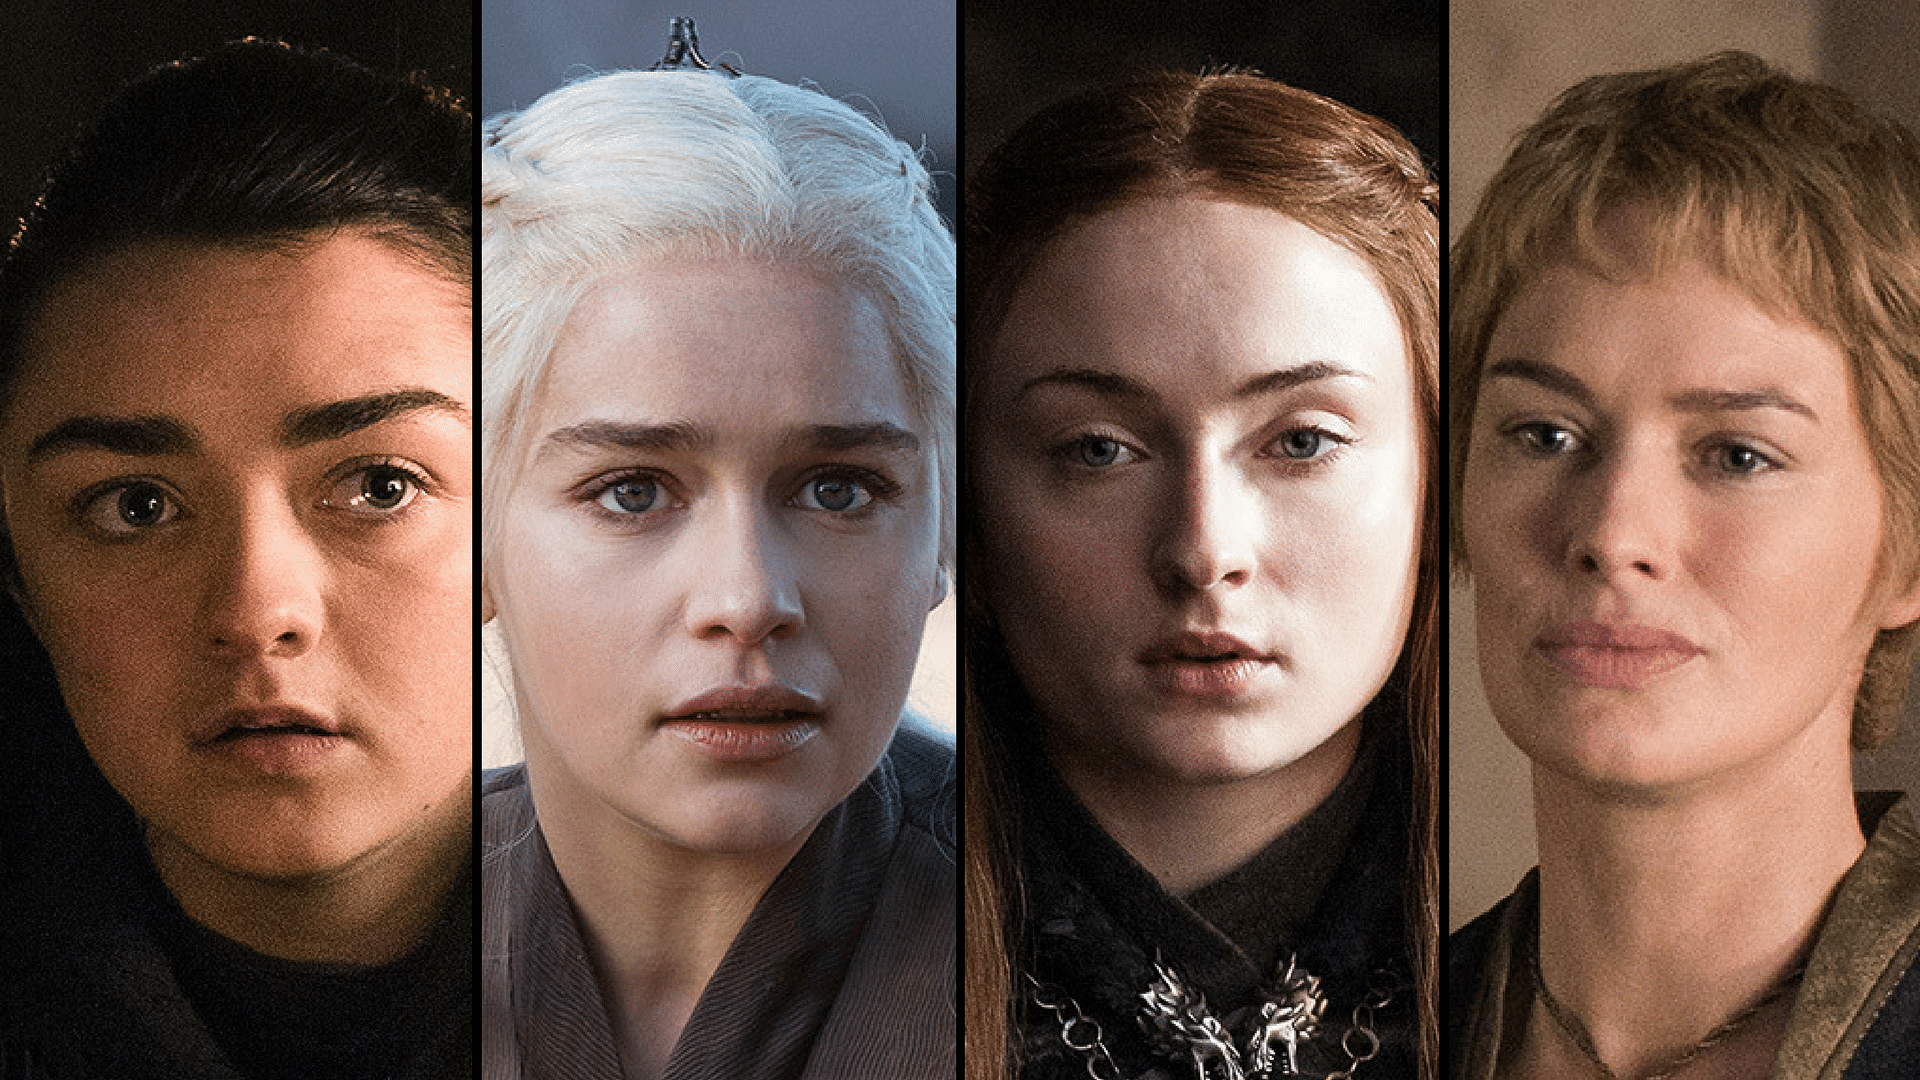 From L to R: Arya Stark (Maisie Williams), Daenerys Targaryen (Emilia Clarke), Sansa Stark (Sophie Turner), and Cersei Lannister (Lena Headey).